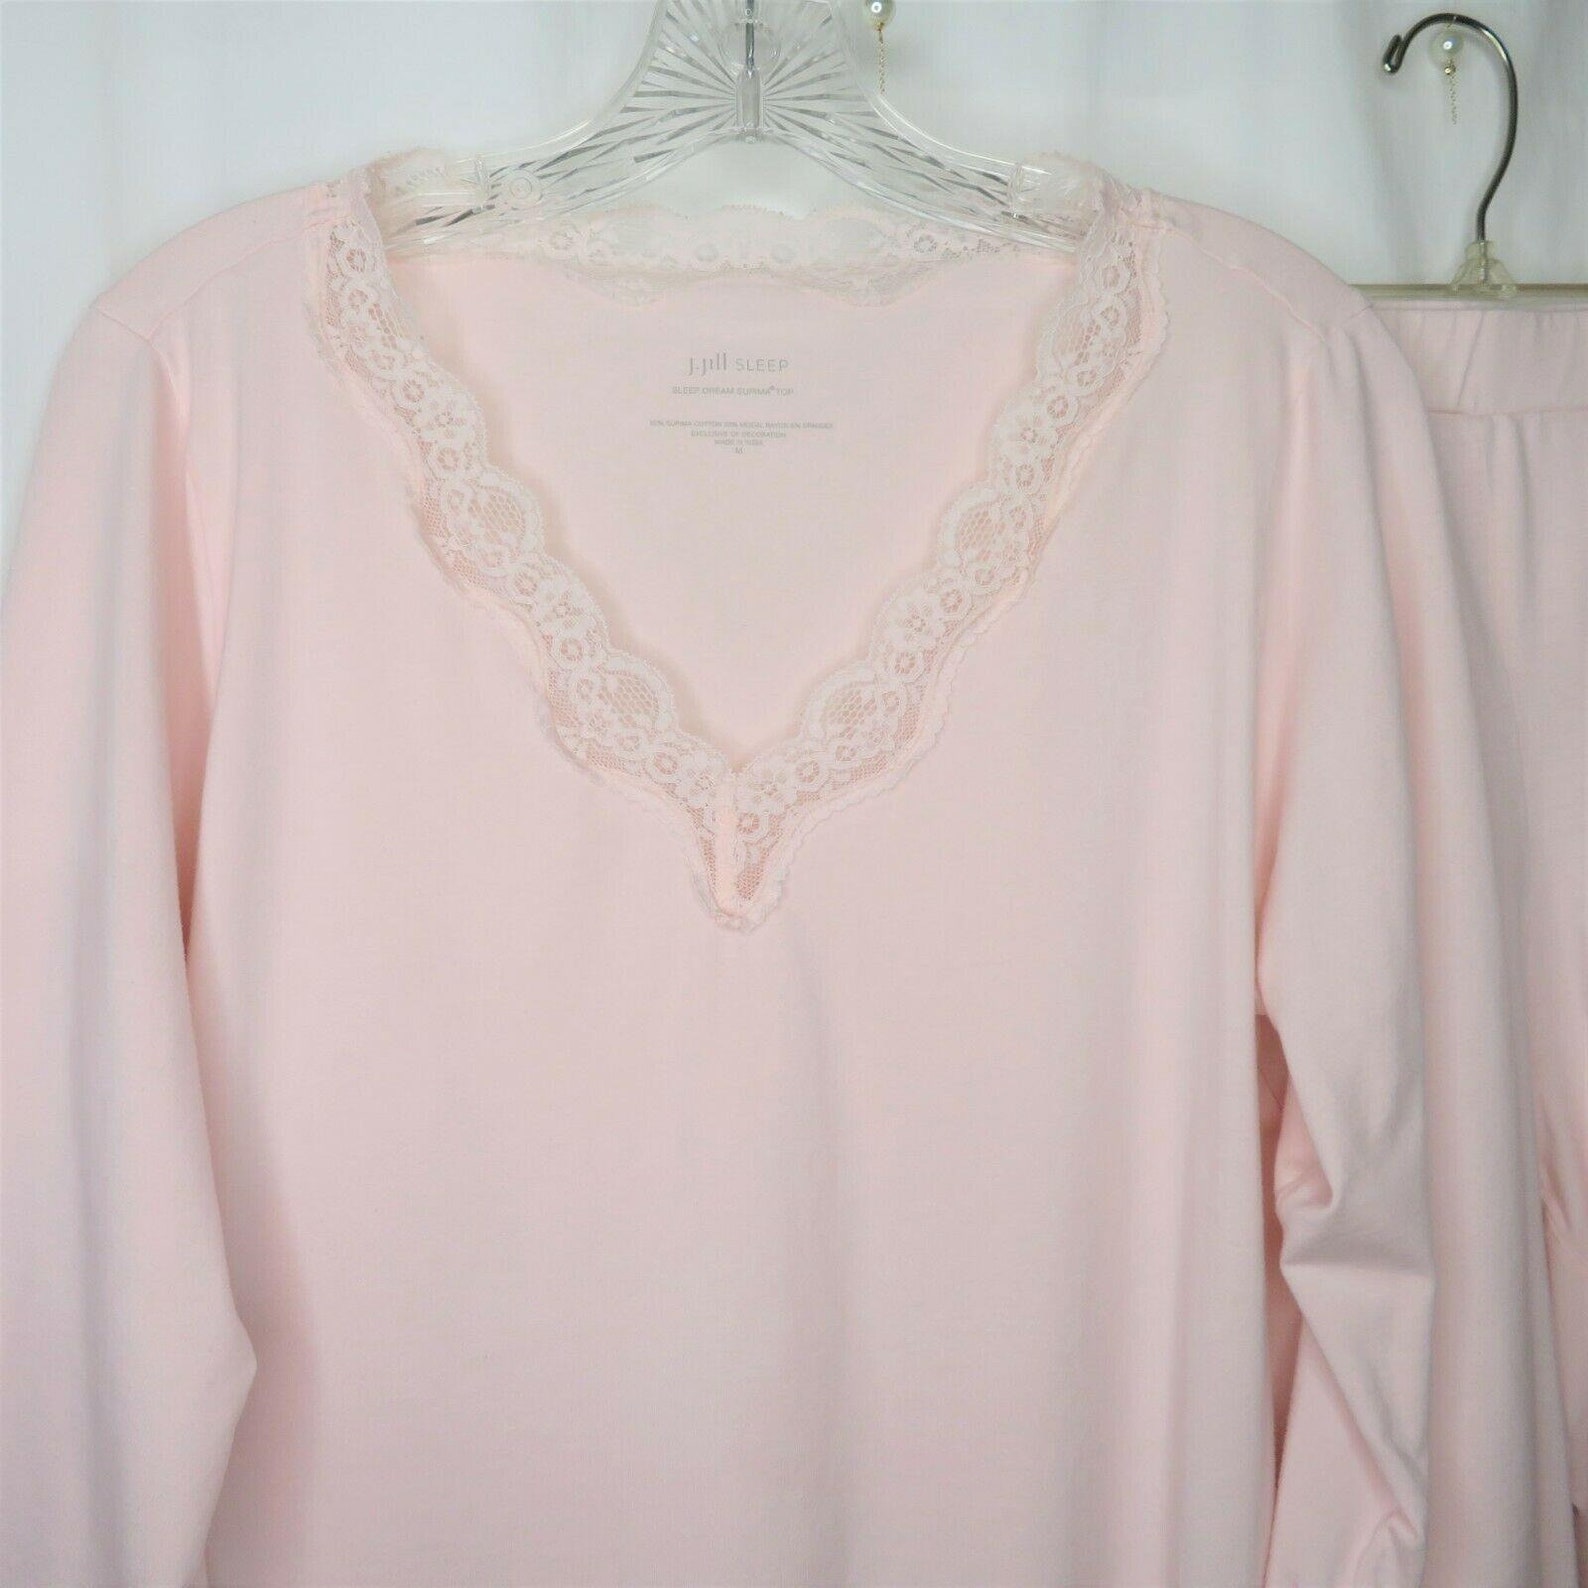 J Jill Sleep Dream Pajamas Set M Pink Lace Trim Sleepwear | Etsy